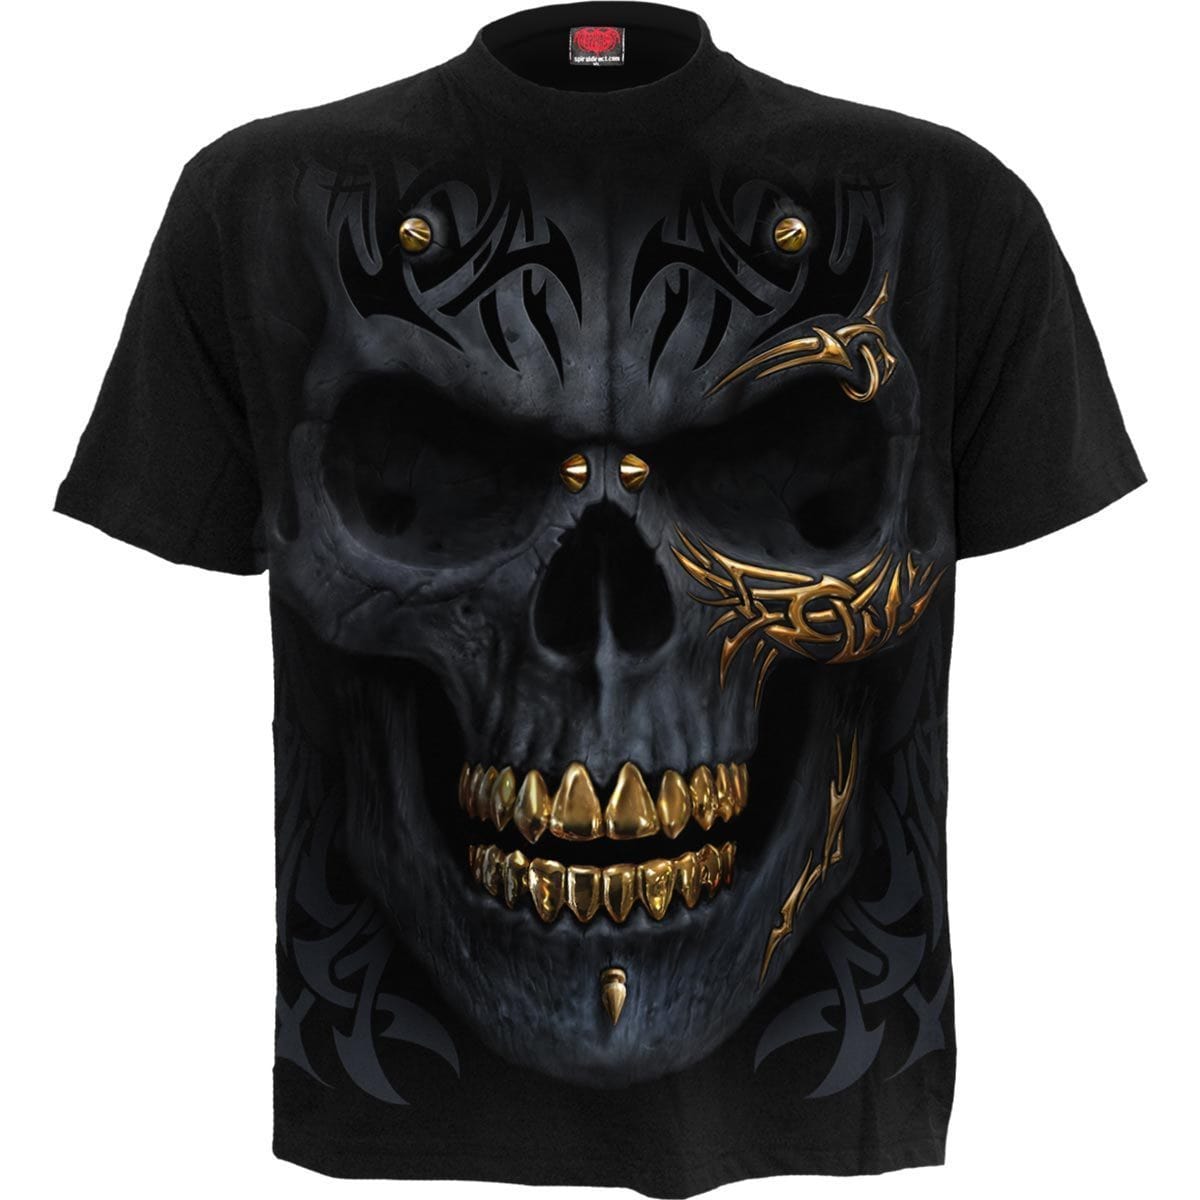 BLACK GOLD - T-Shirt Black - Spiral USA